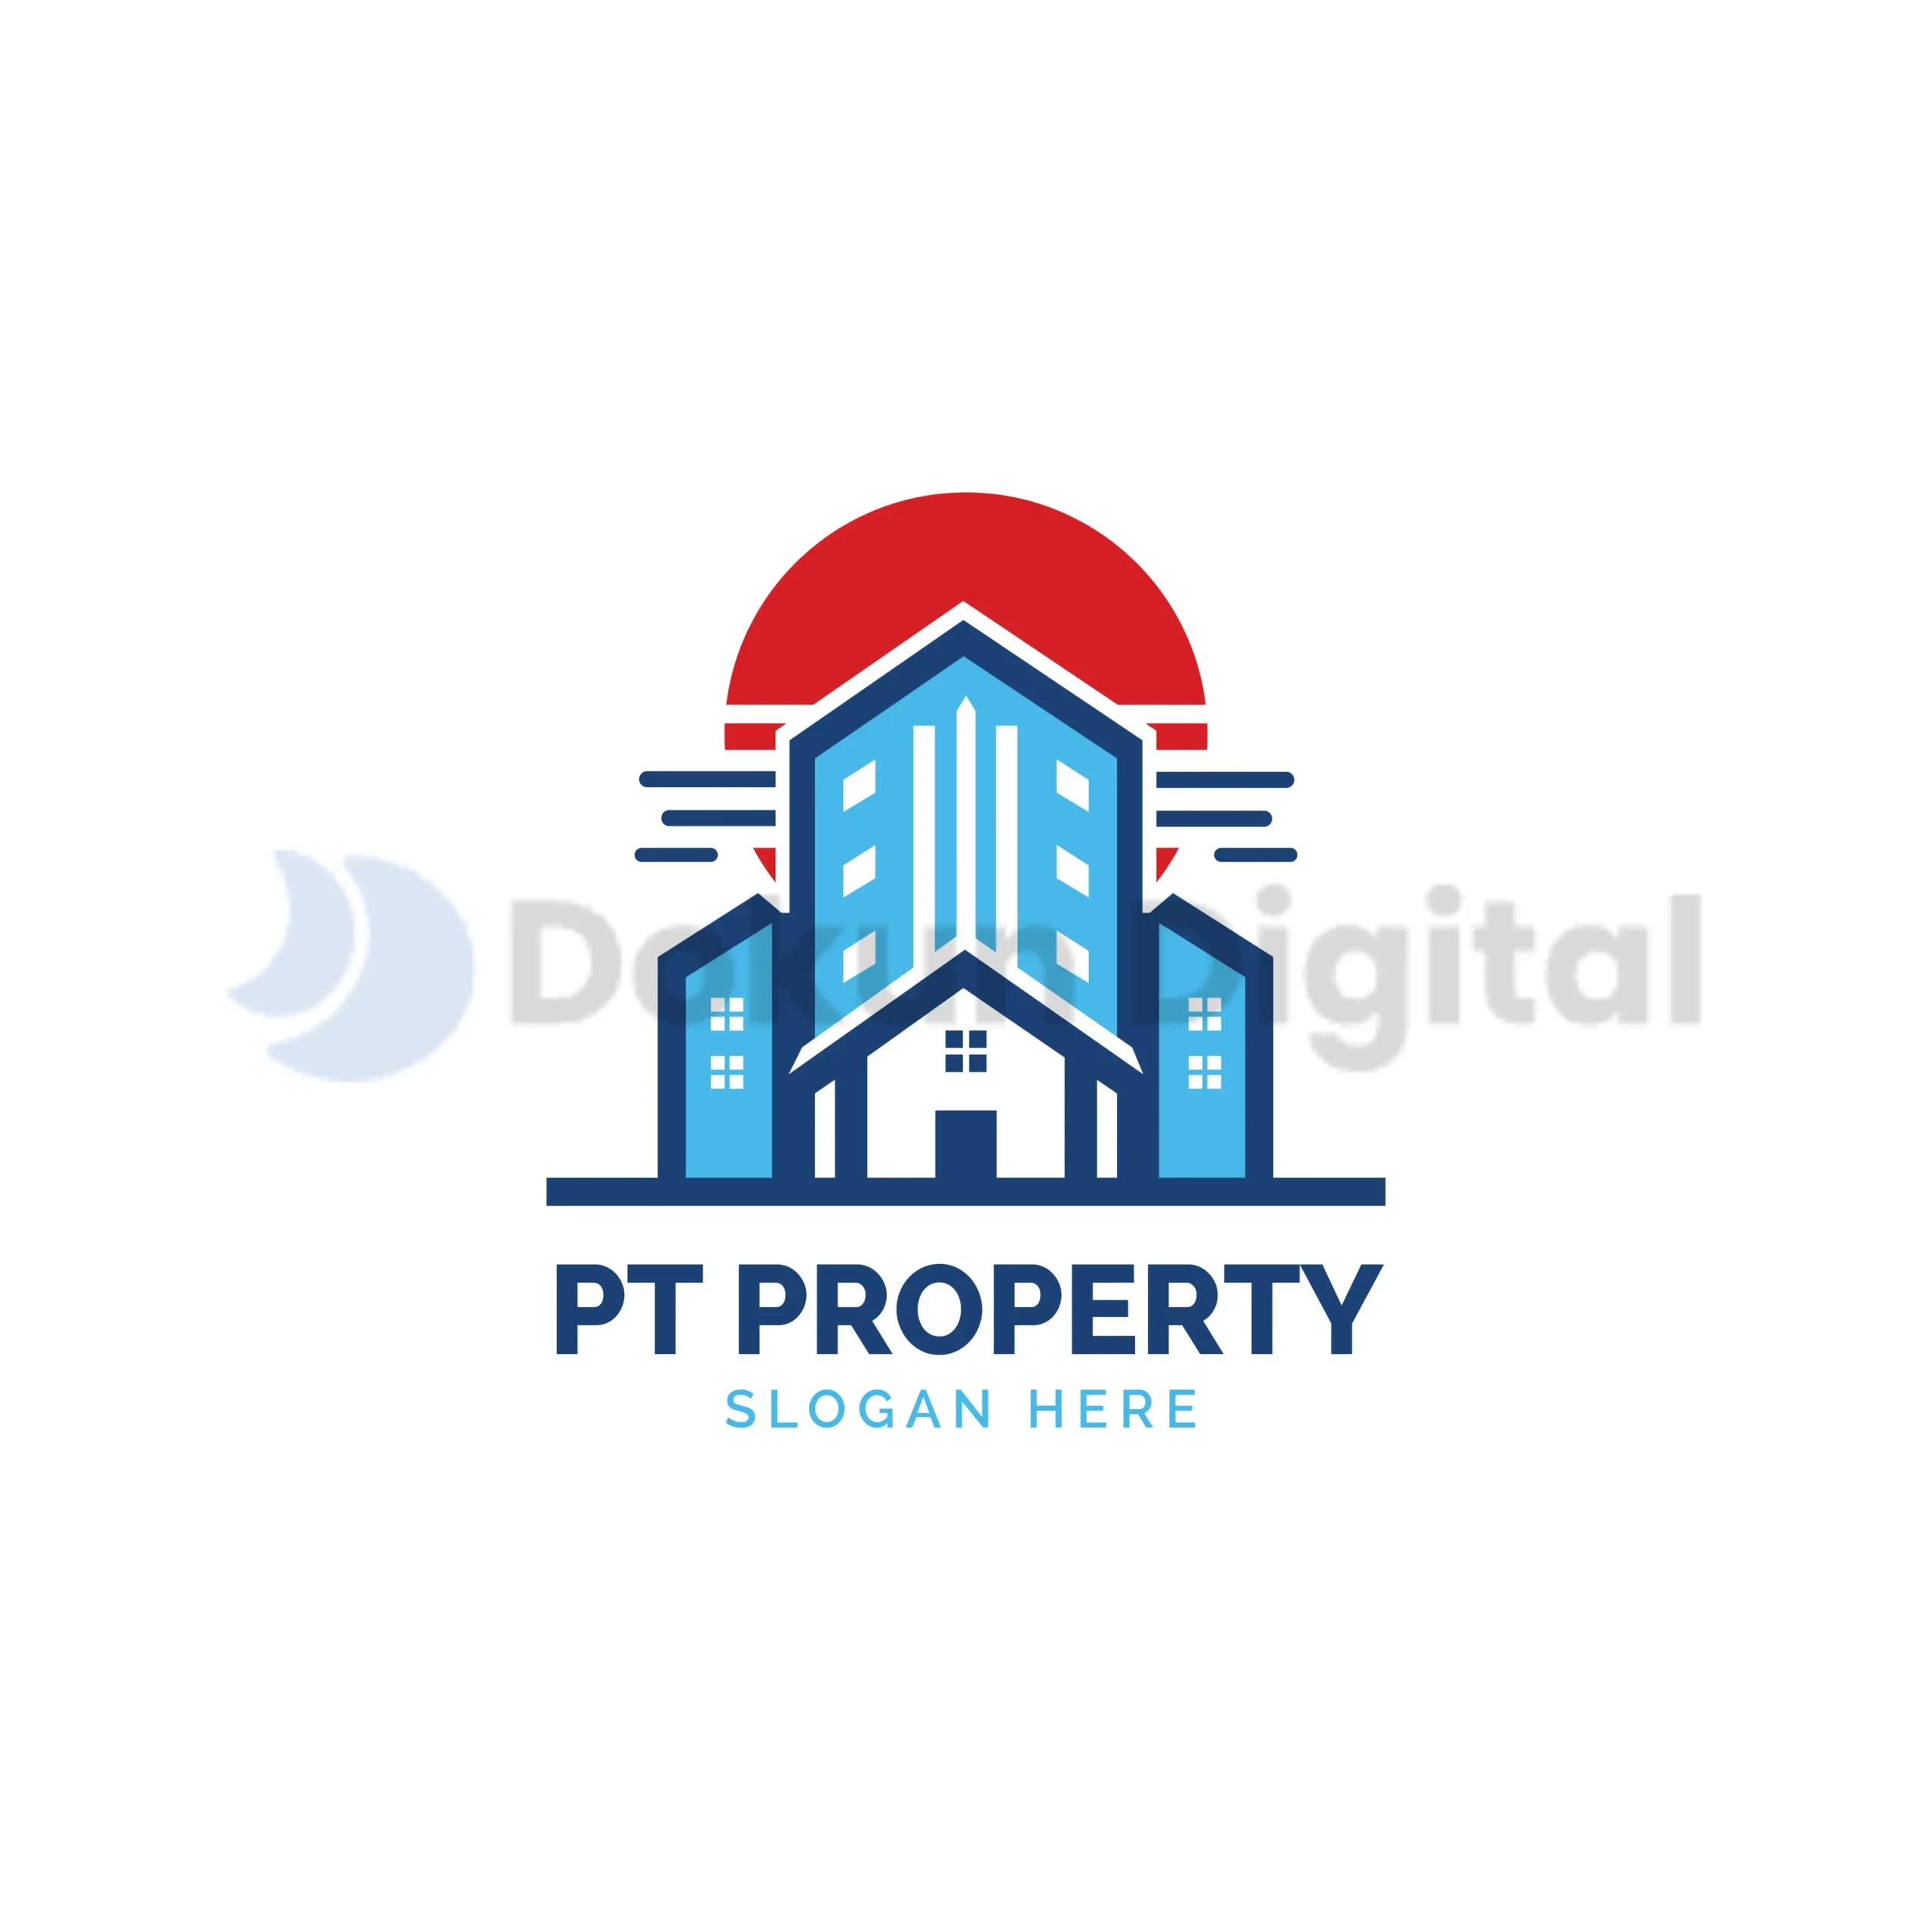 Logo PT Property